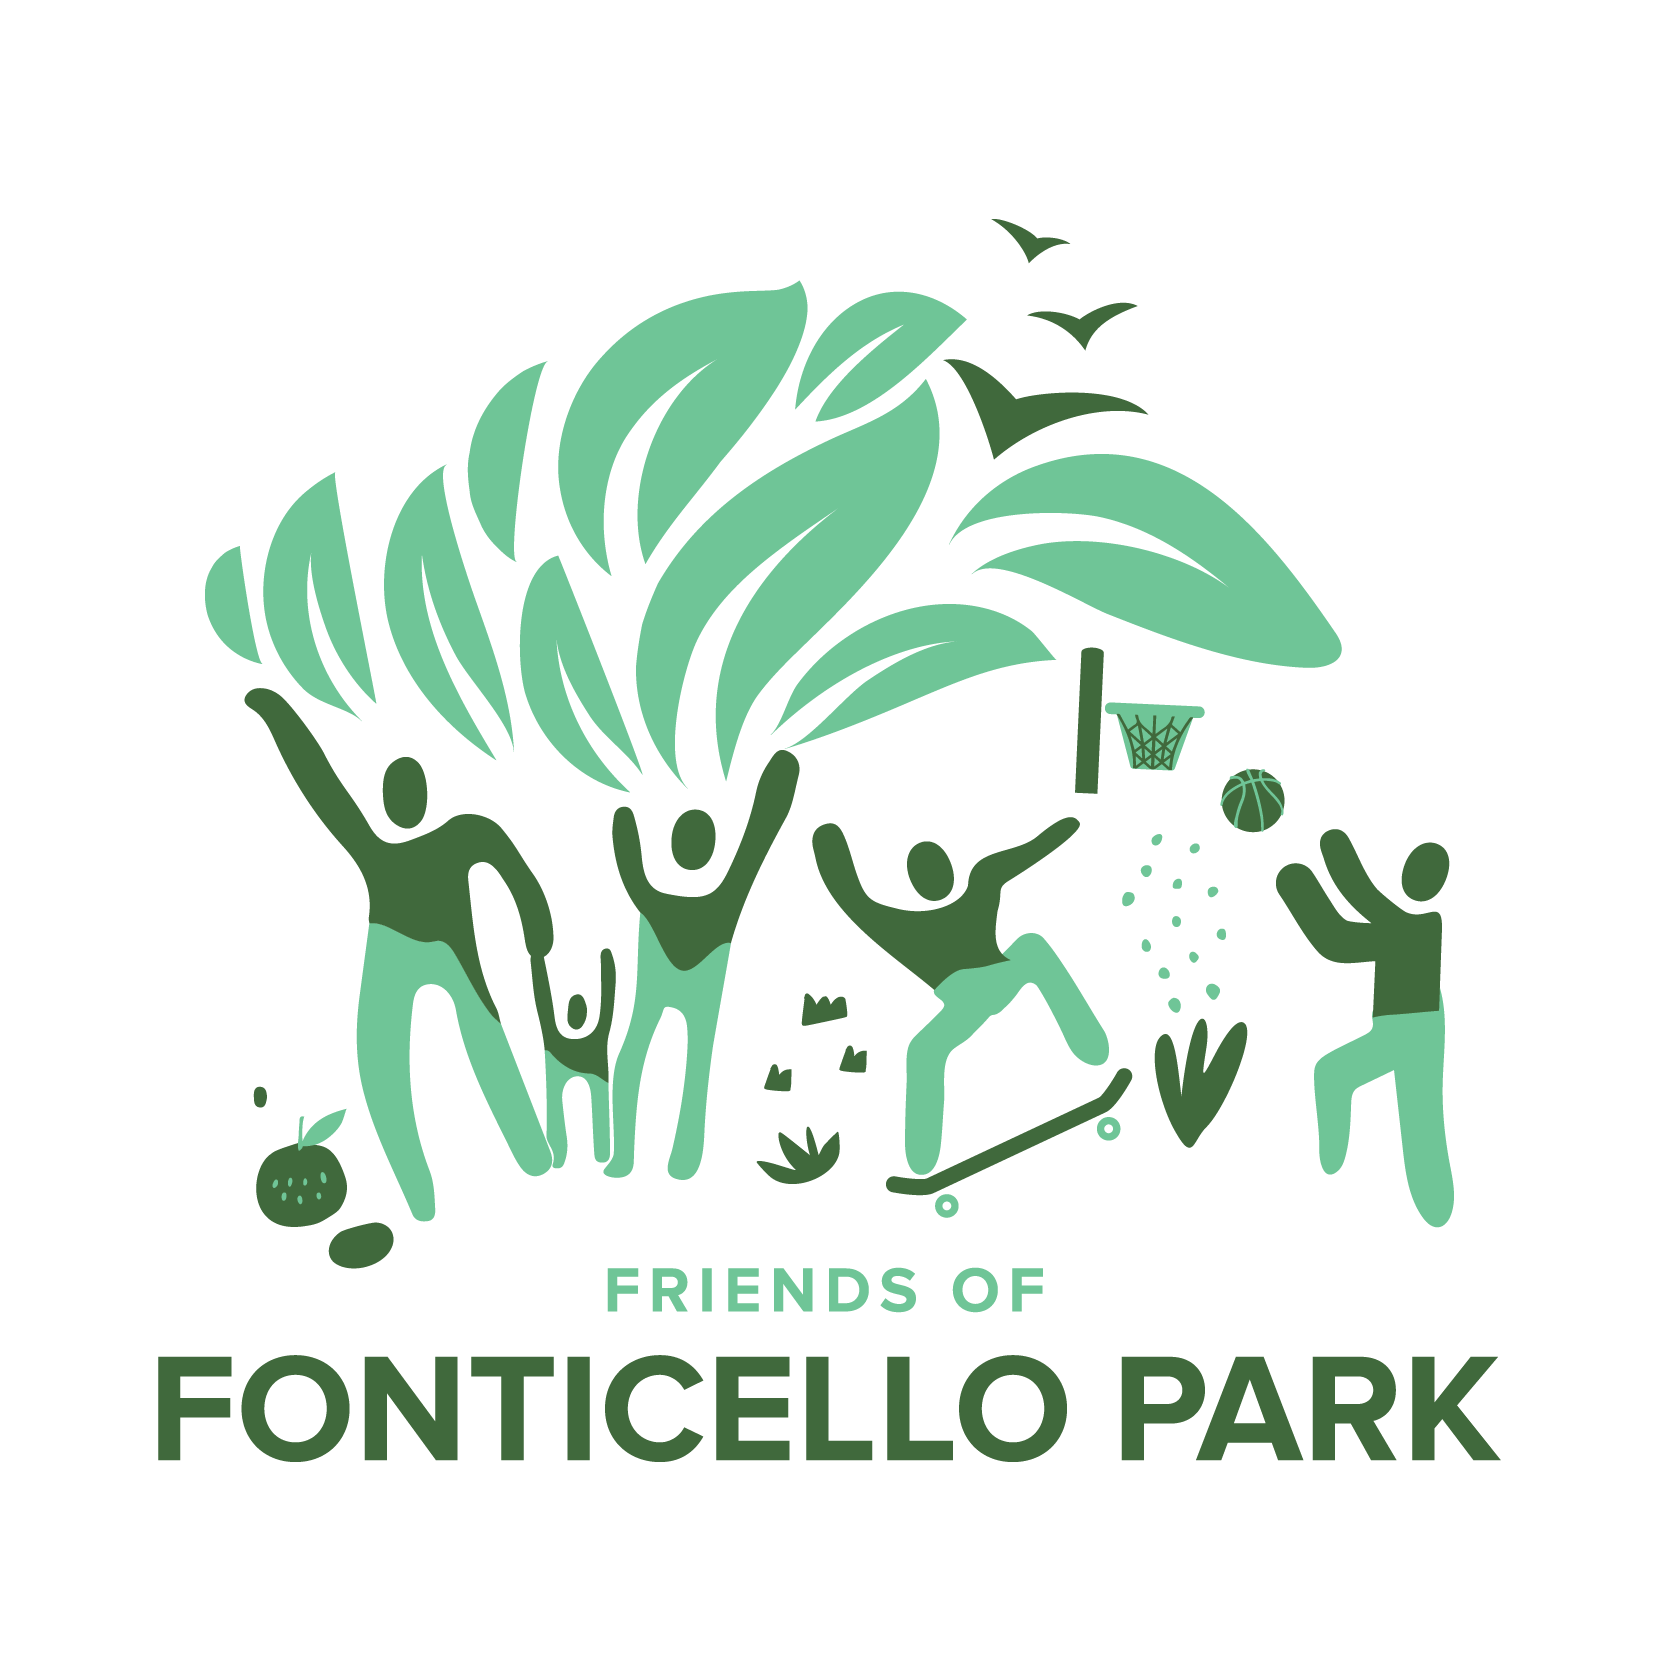 FRIENDS OF FONTICELLO PARK